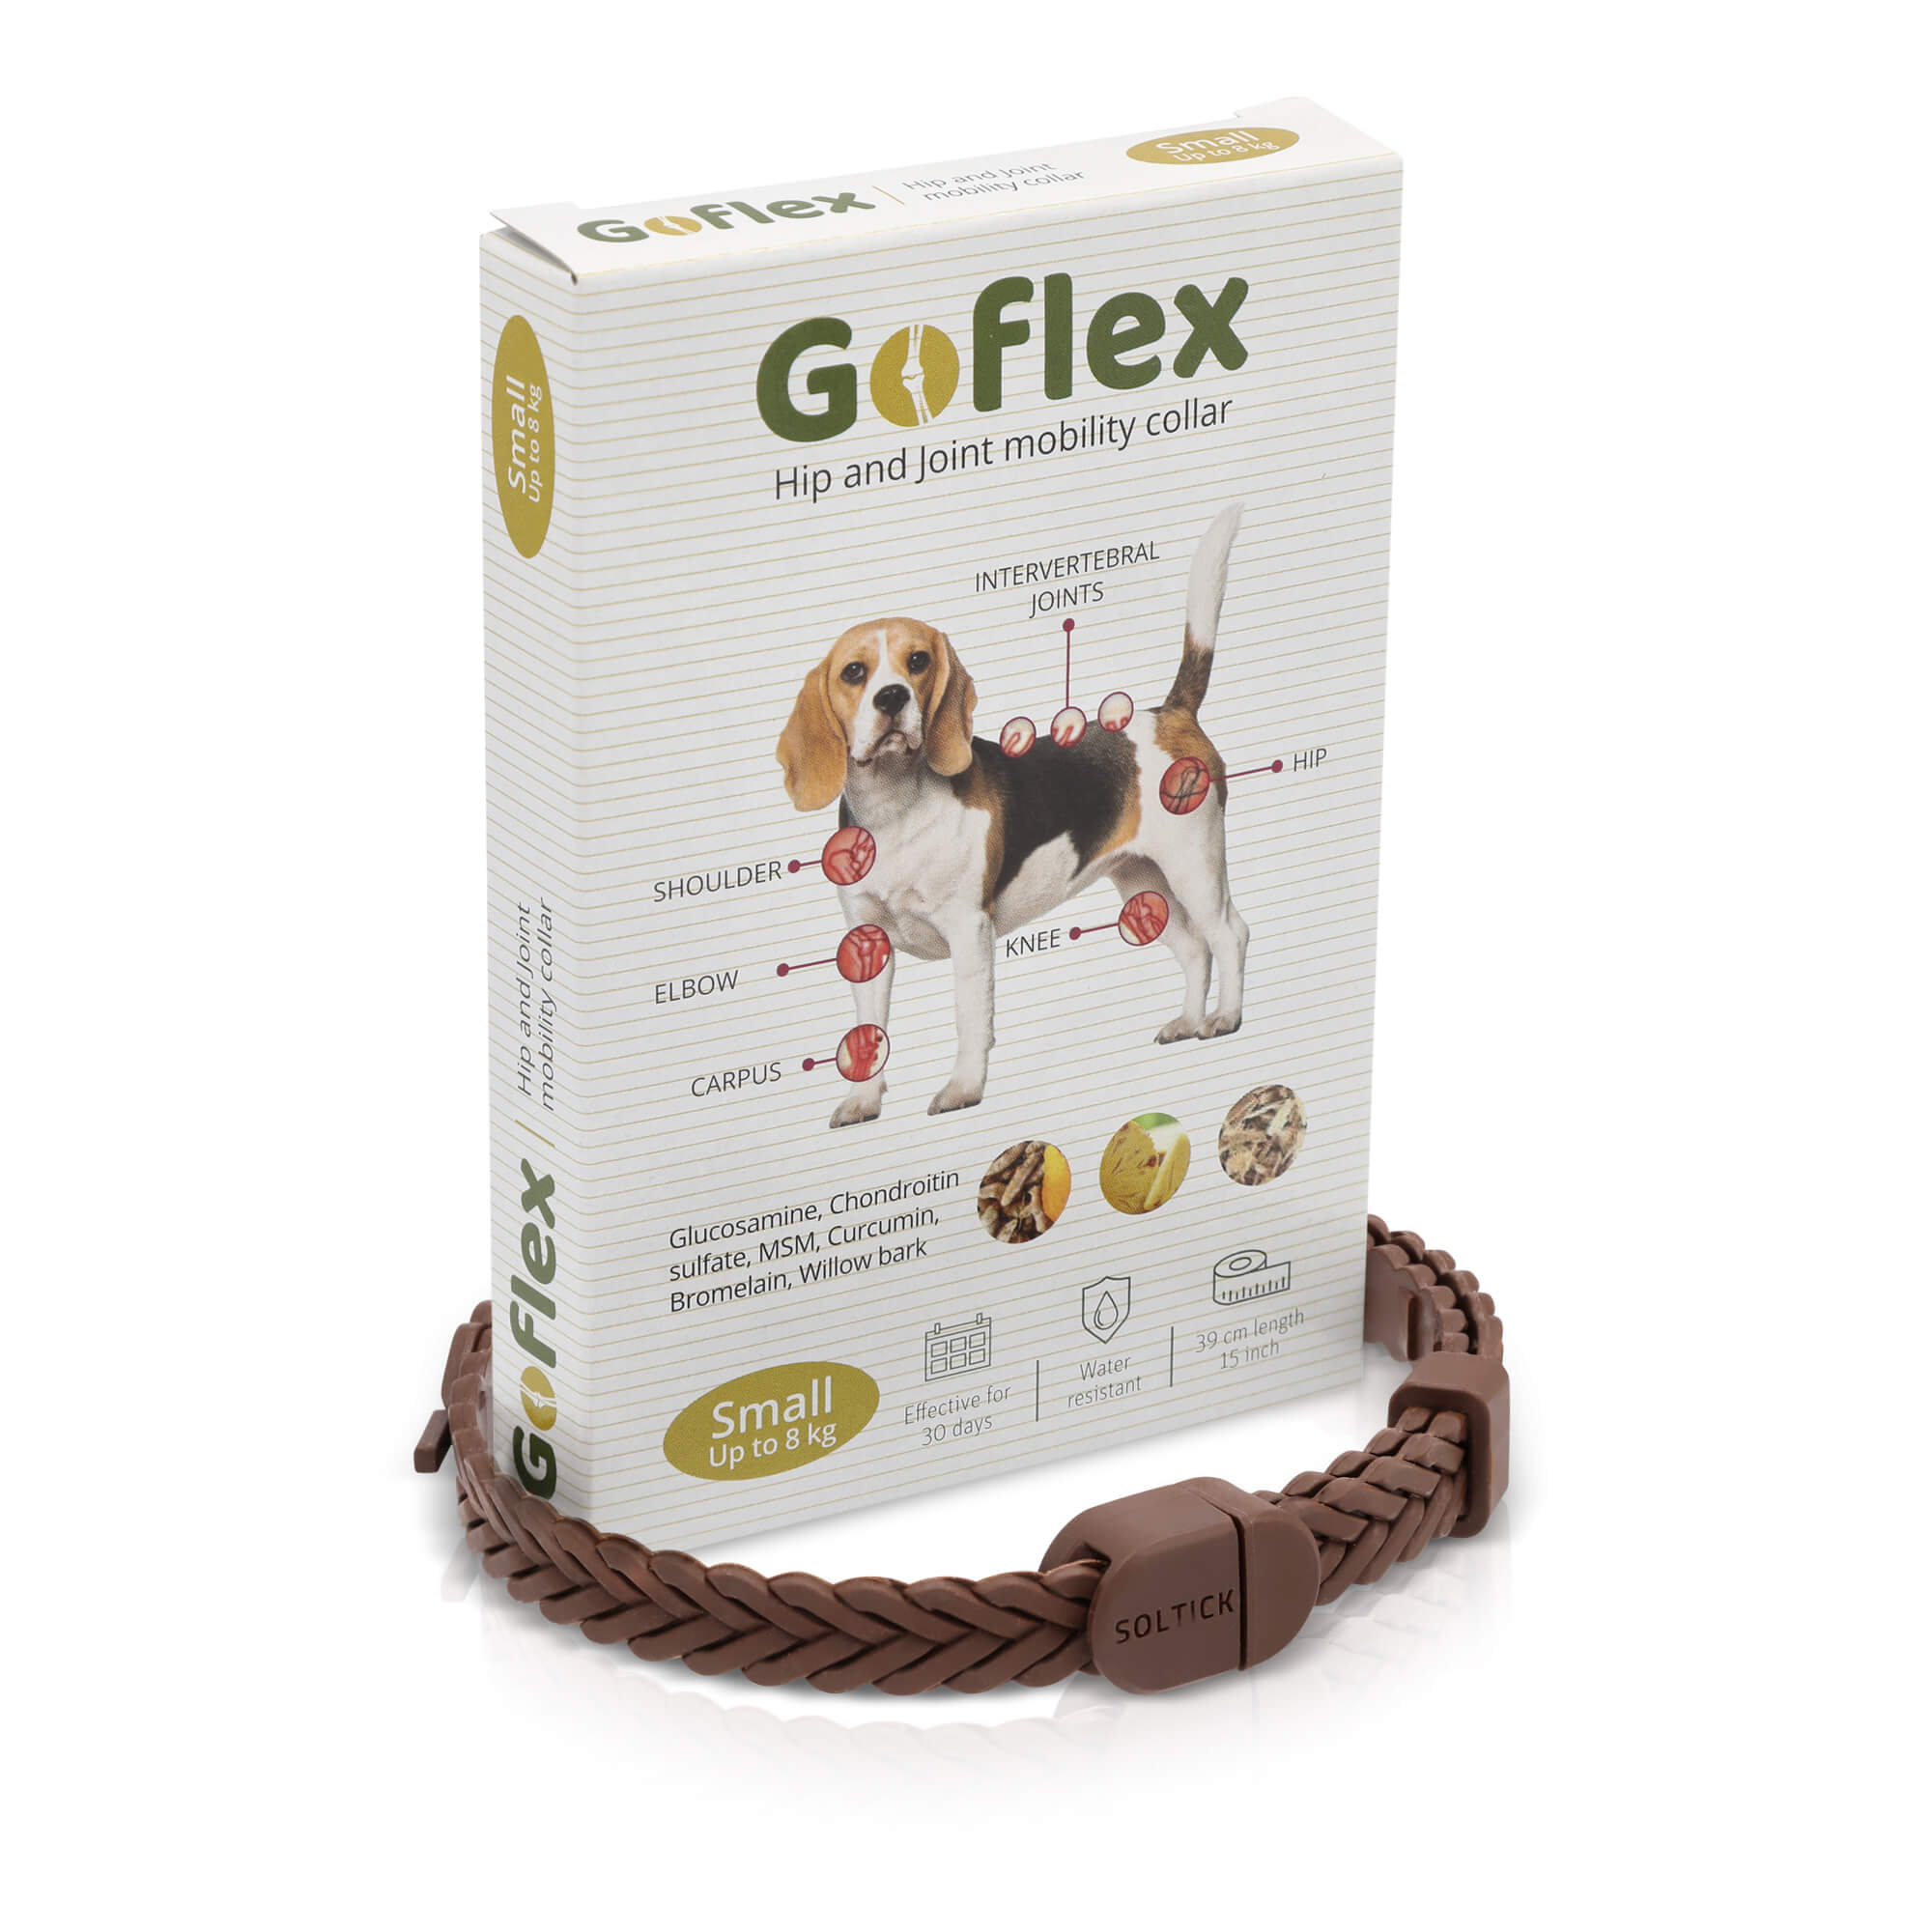 Goflex Collar - Hip & Joint Mobility Collar